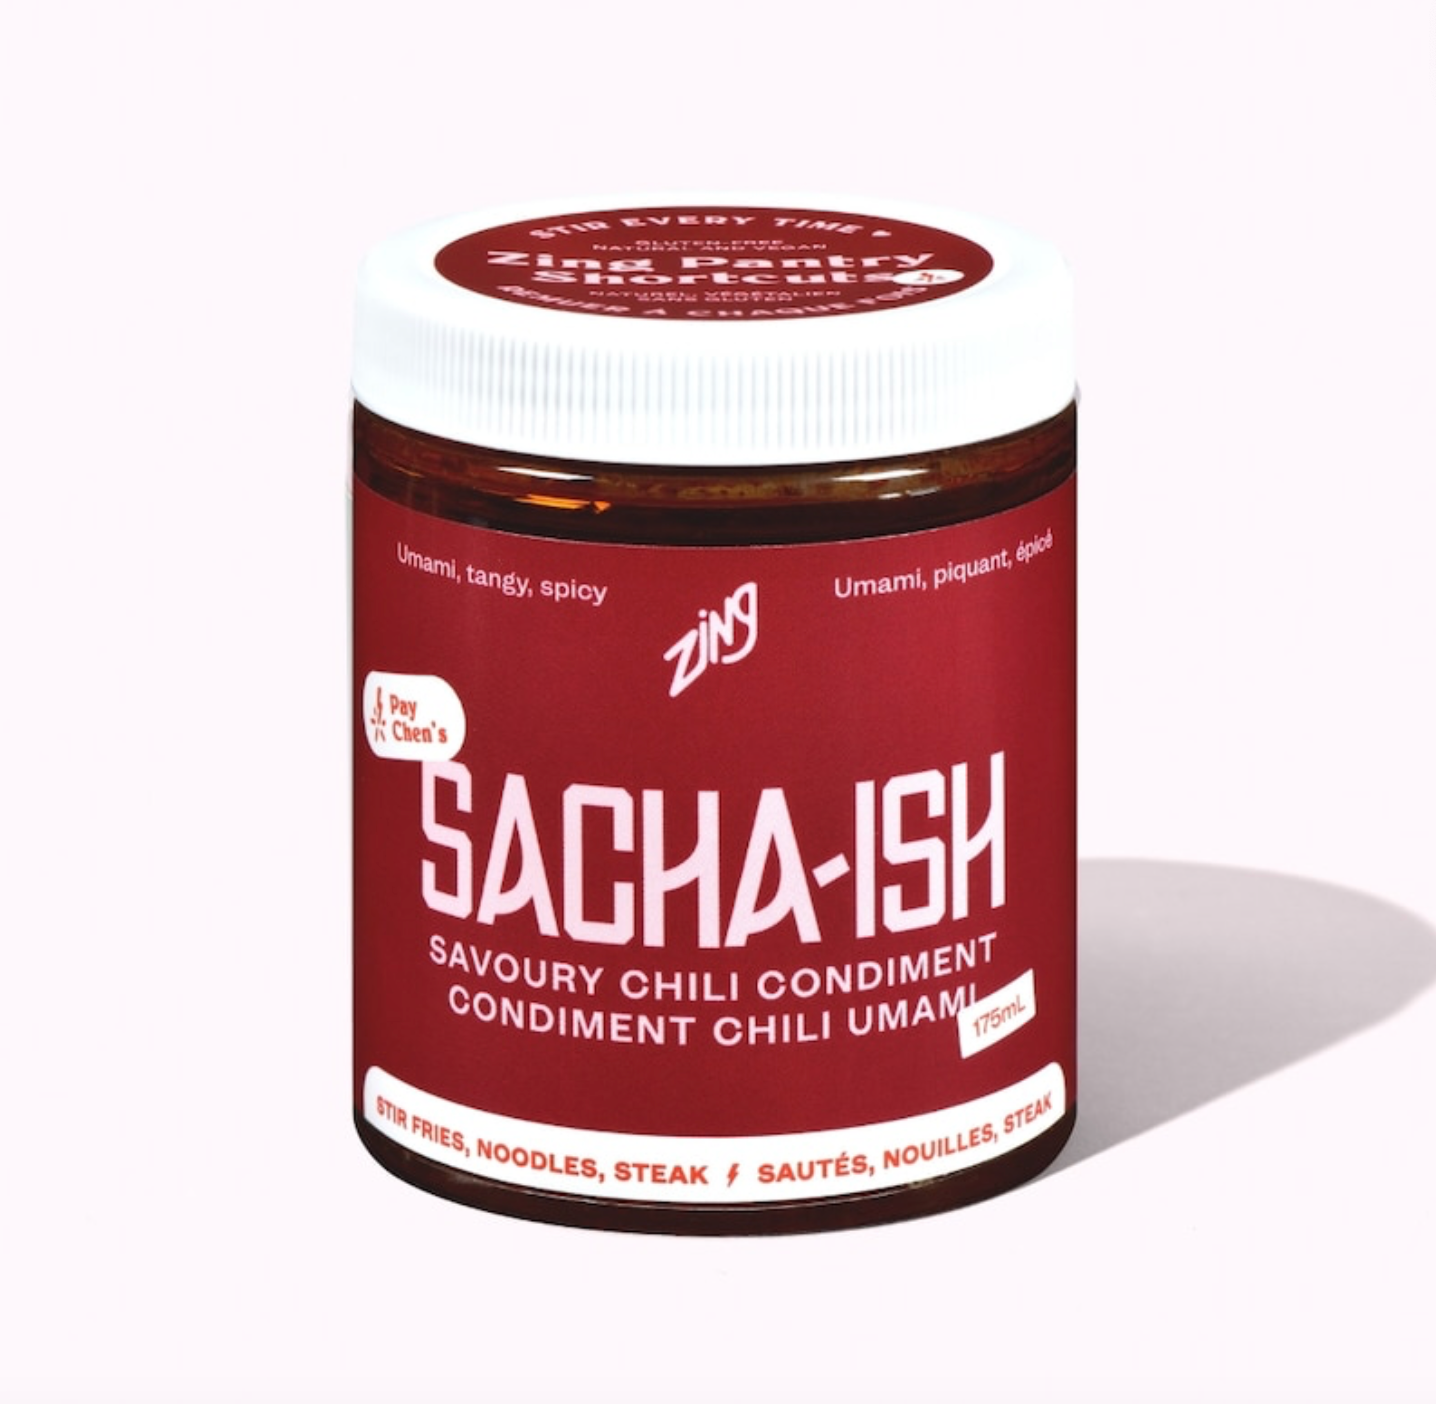 Zing Panty Shortcuts - Pay Chen's Sacha-ish Chili Miso Condiment